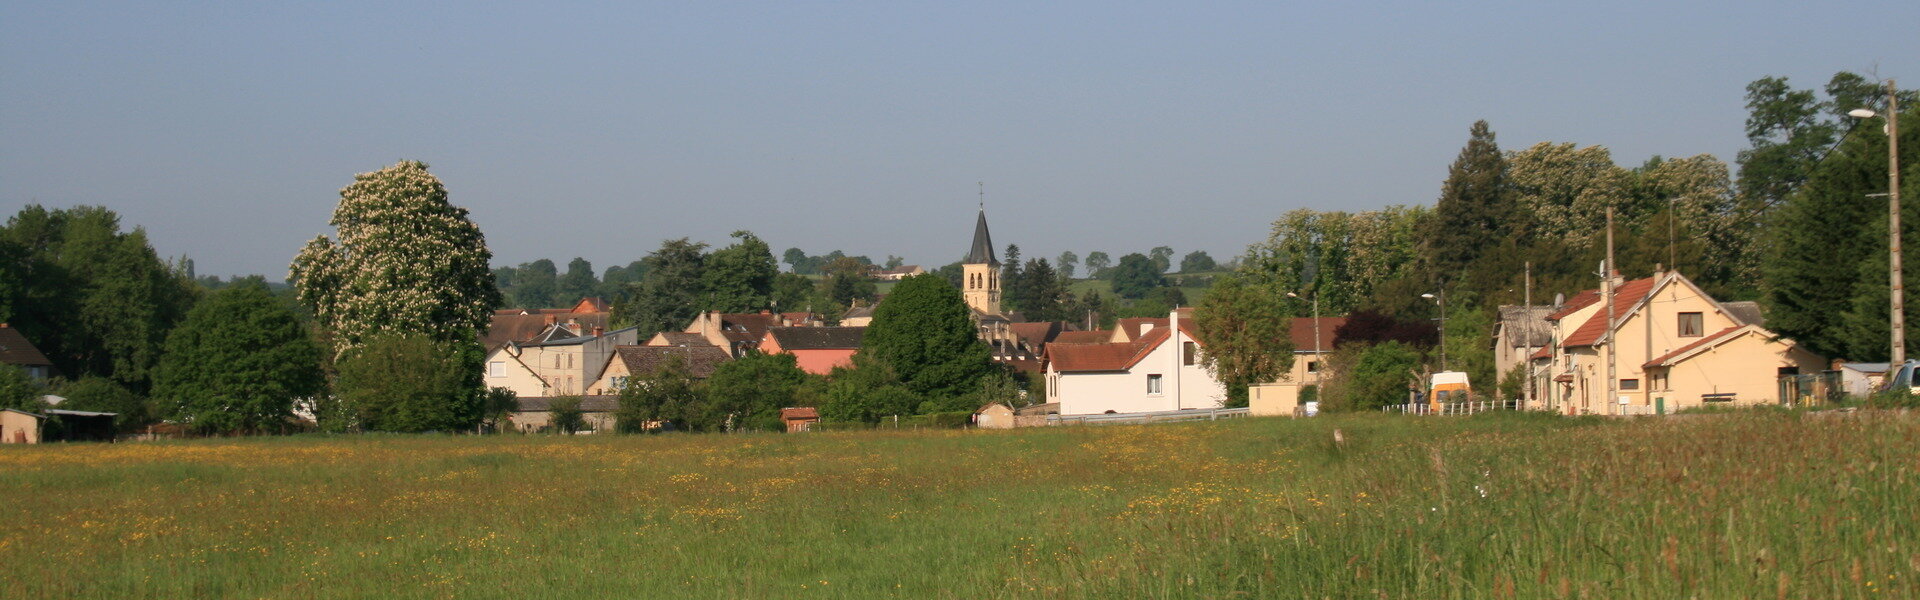 Commune Mairie Le Donjon Allier Auvergne Rhône Alpes